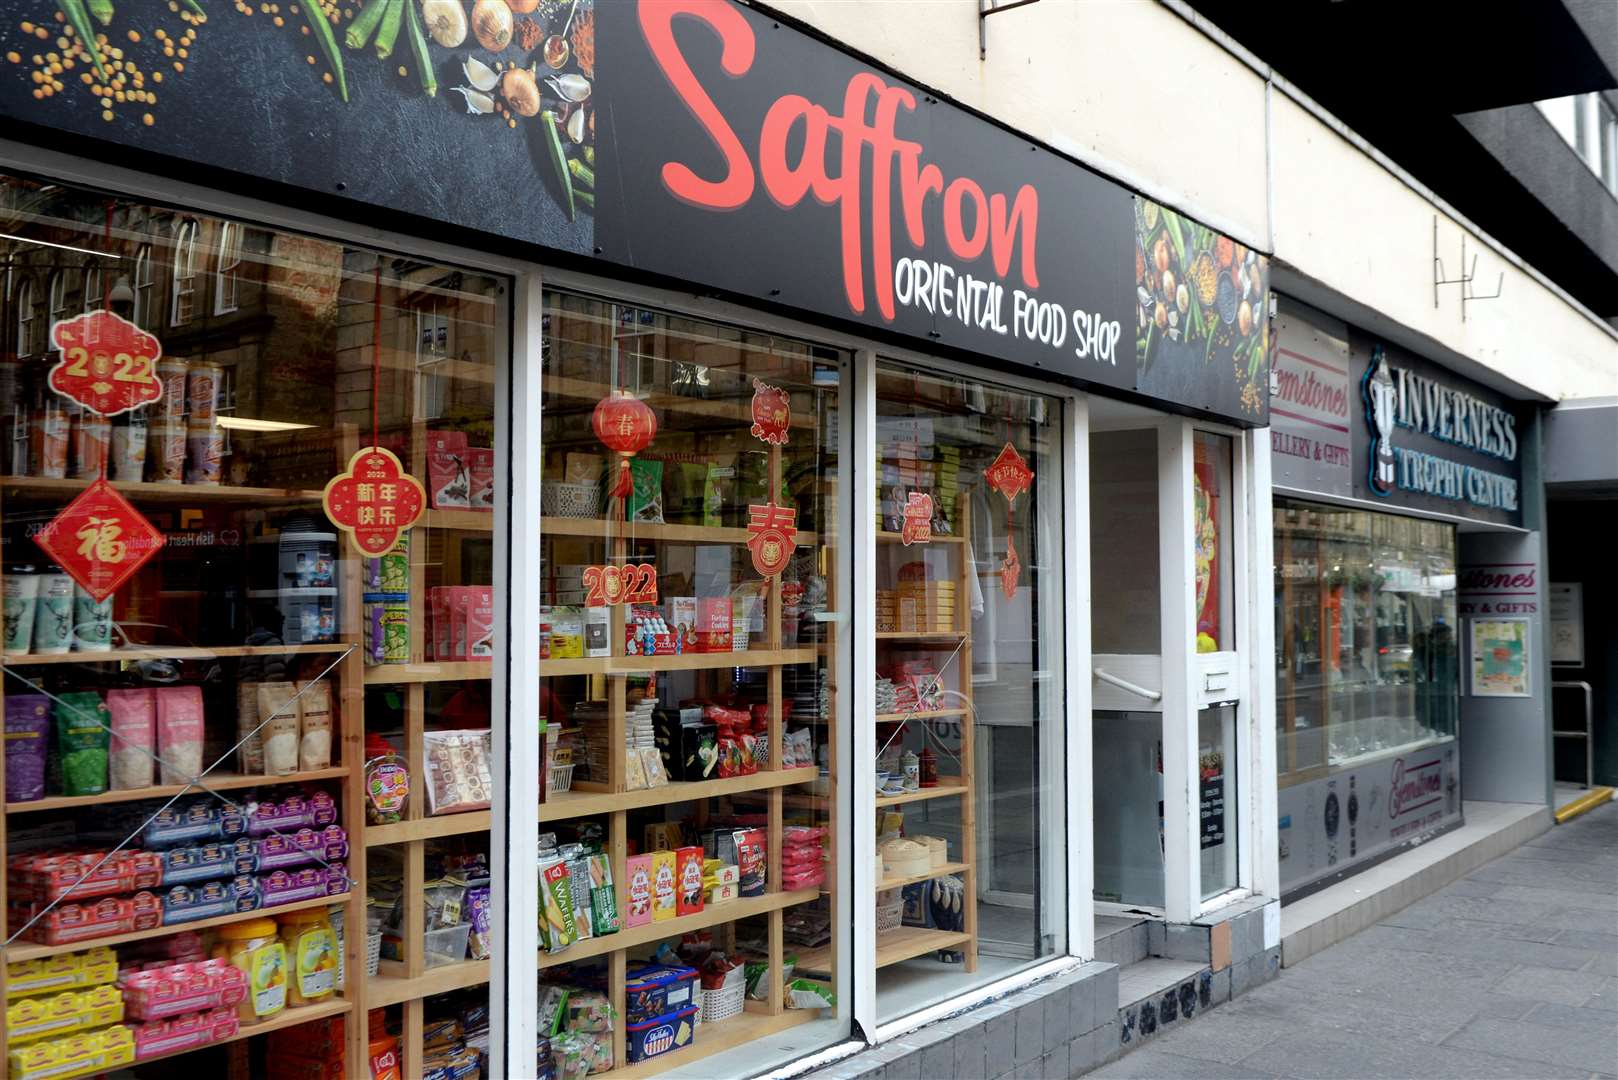 Award-winning Saffron Oriental Food Shop in Church Street.